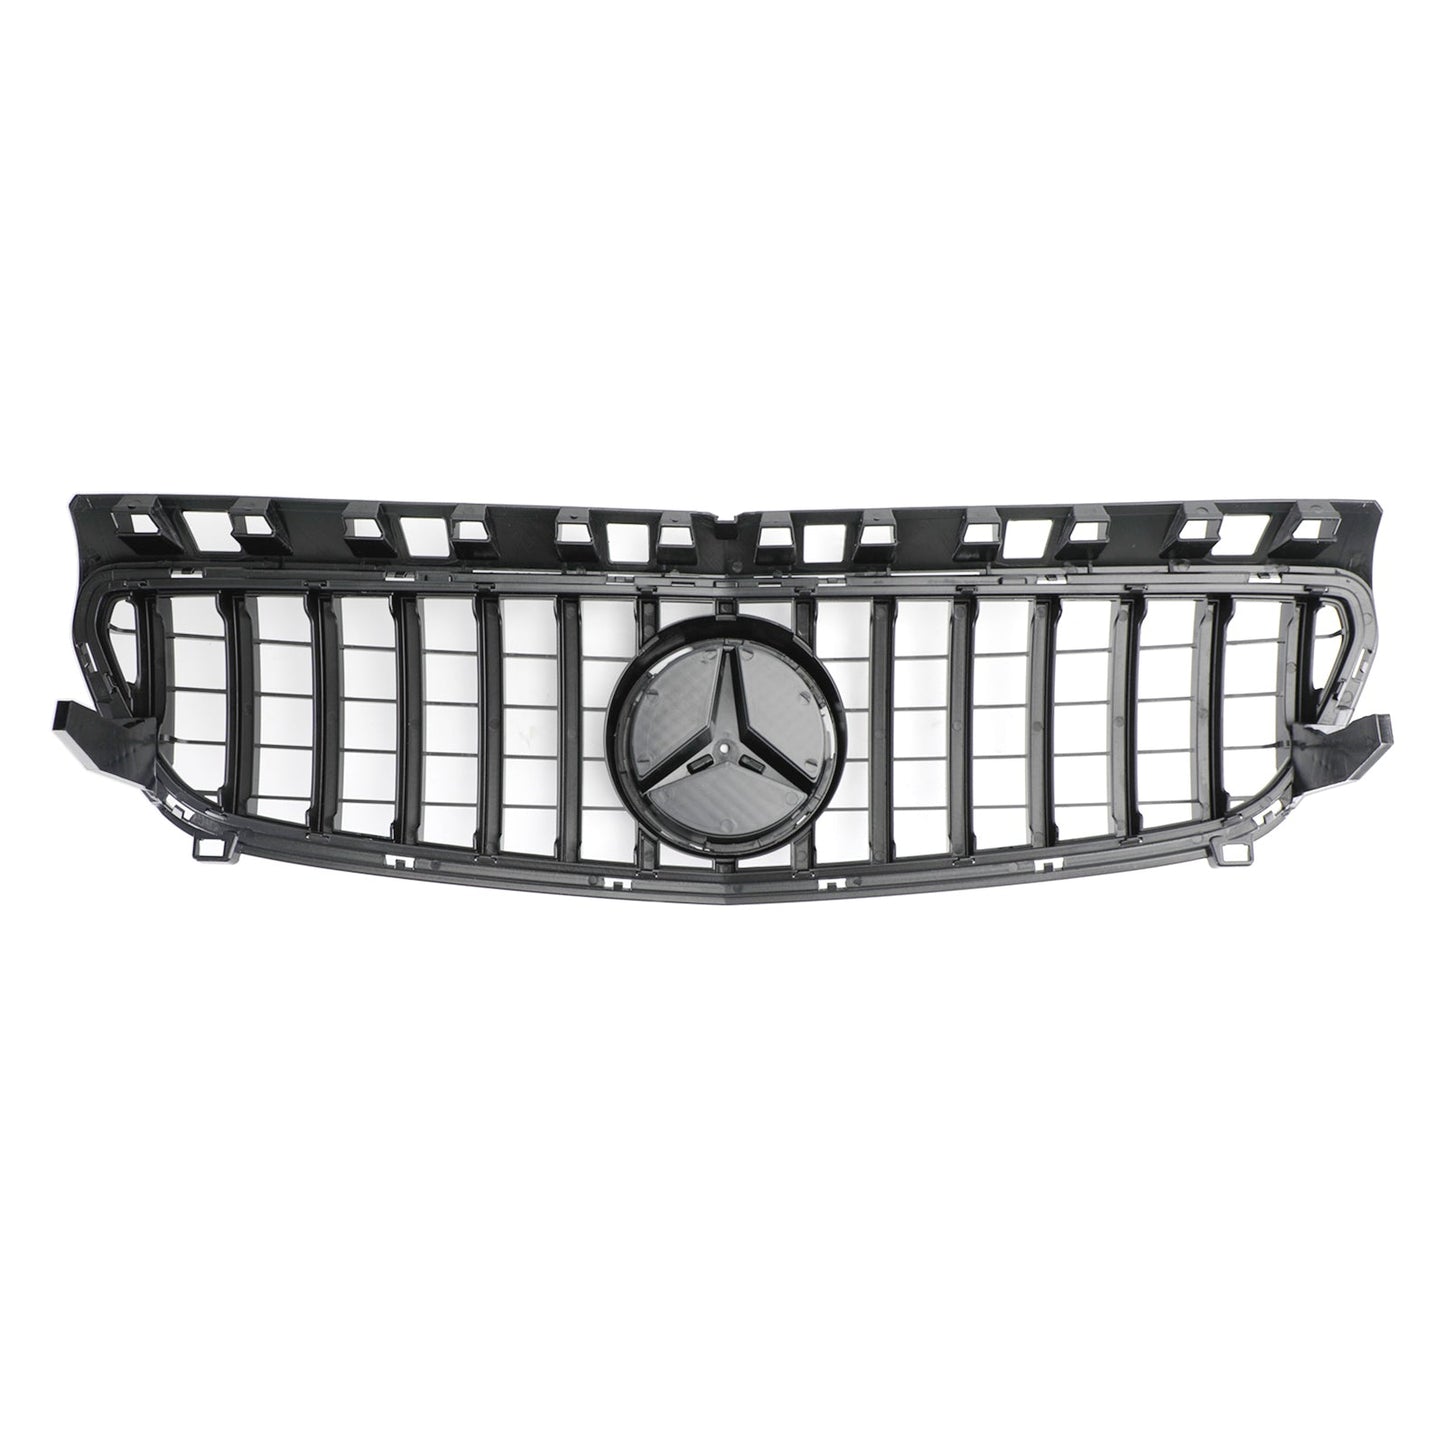 2013-2015 Benz A CLASS W176 A180 A200 A220 A250 Hatchback Mercedes Benz Grill Car grille Gloss Black Front Bumper Grille Grill